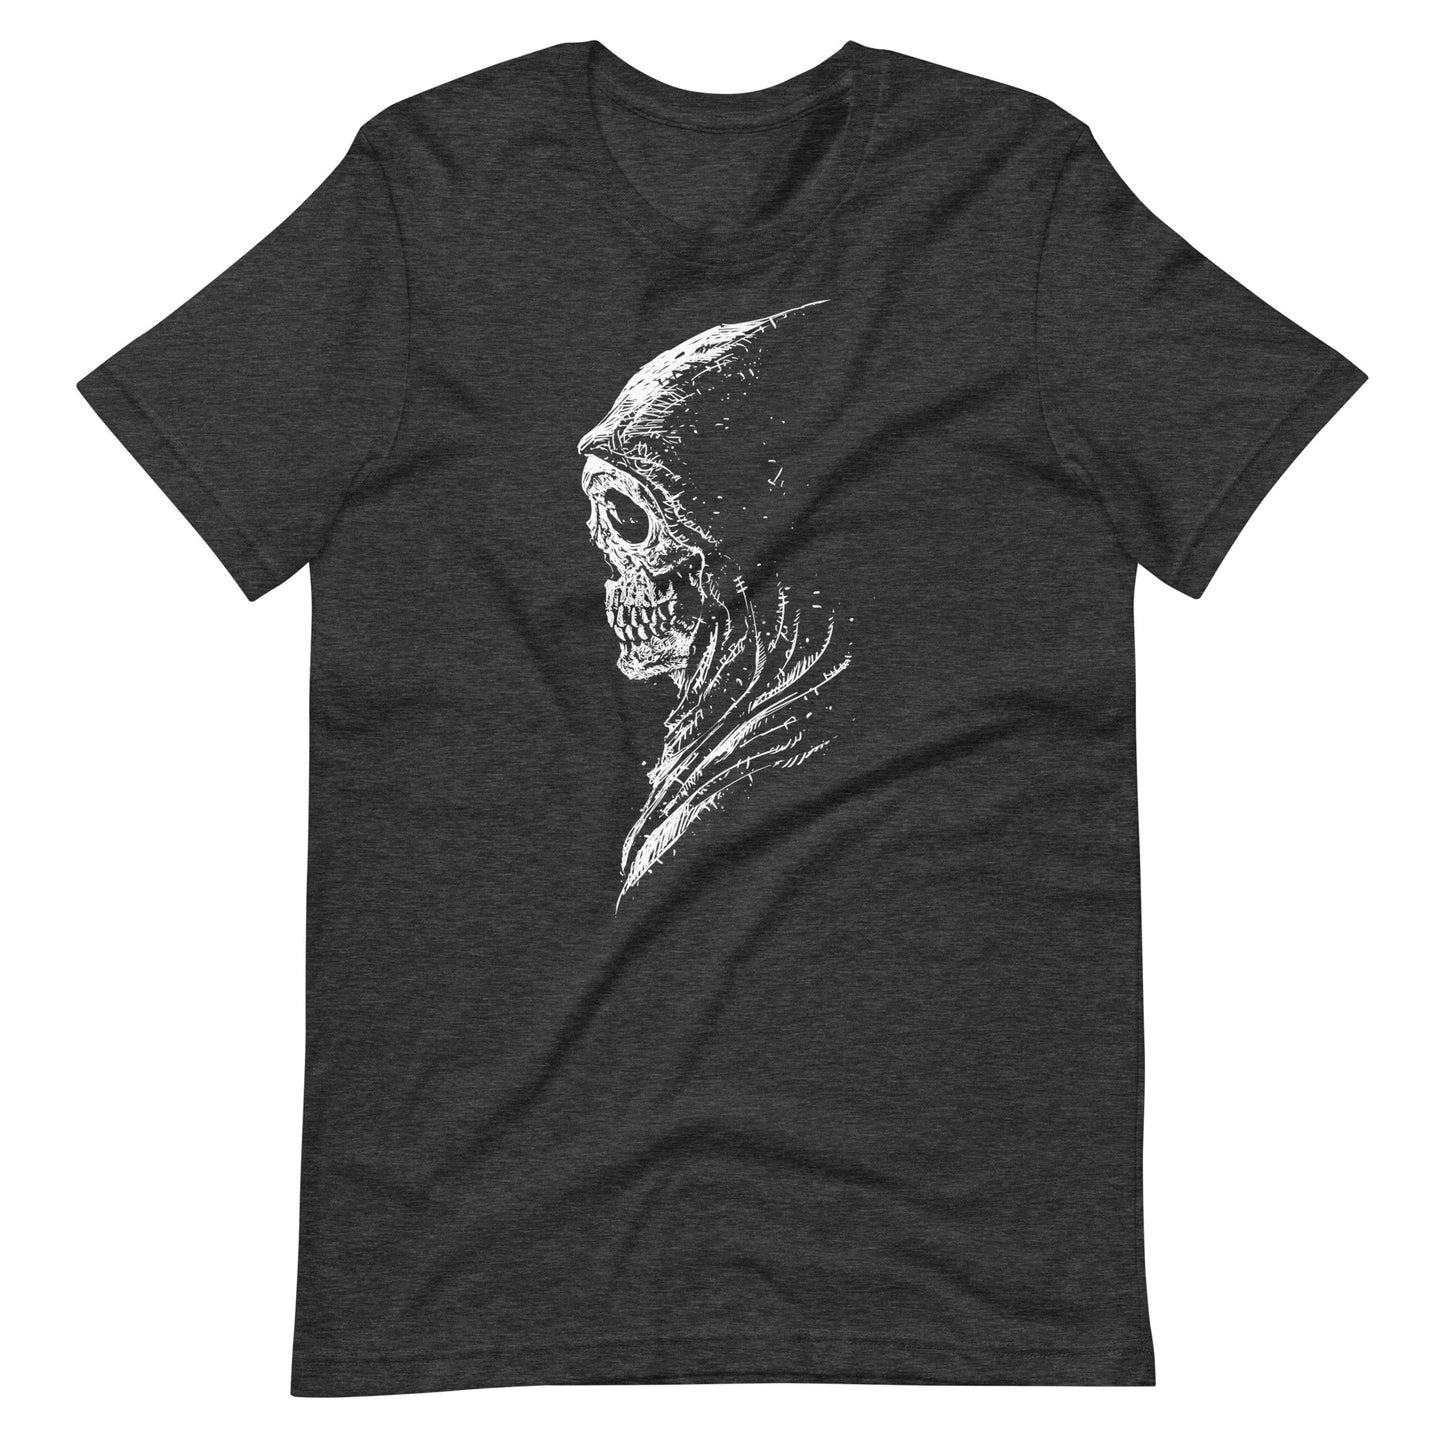 Muse - Men's t-shirt - Dark Grey Heather Front